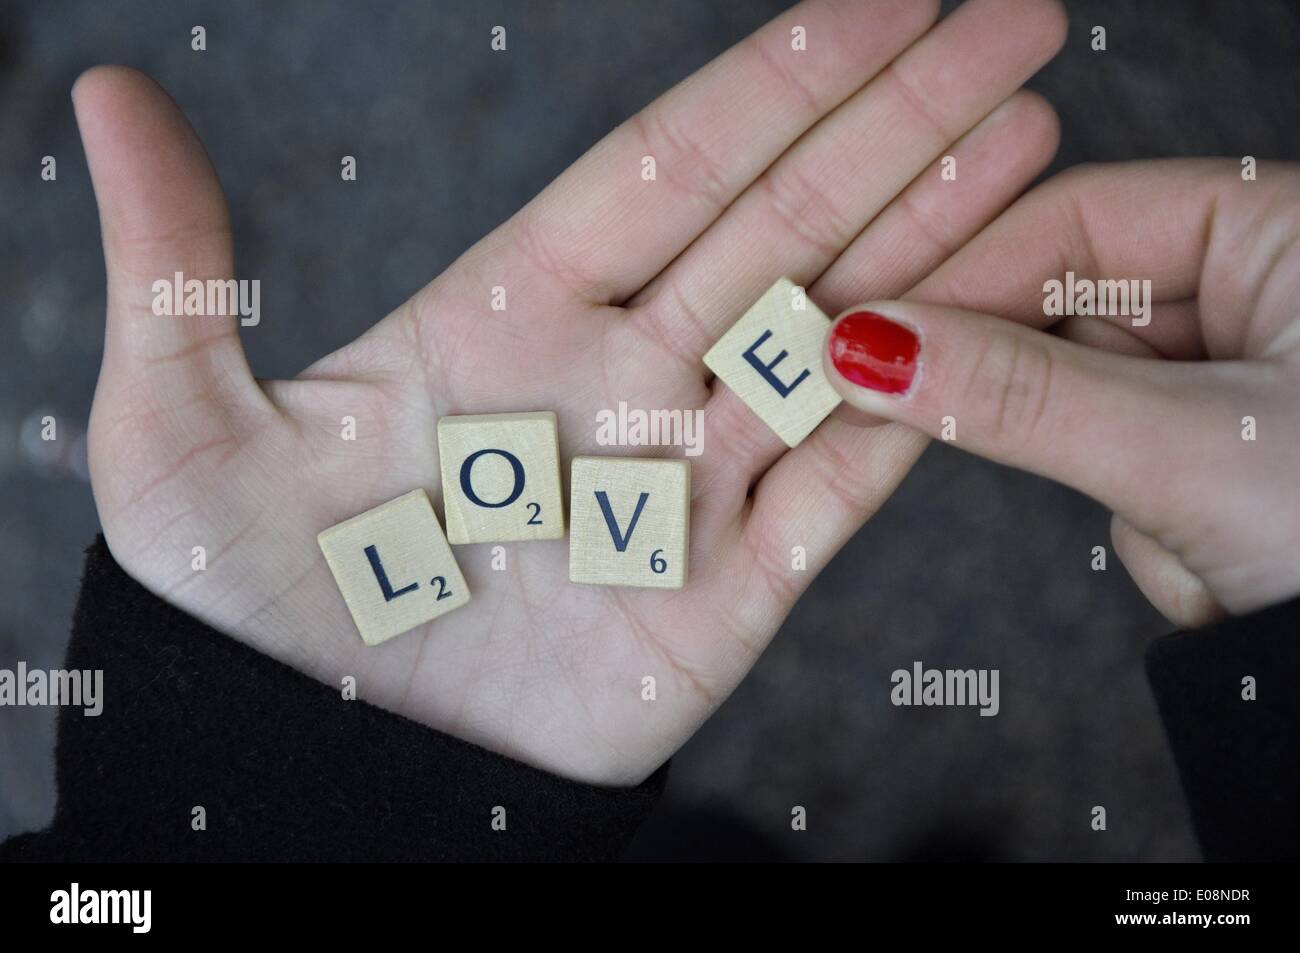 Illustration - Scrabble tiles on a women's hand form the word 'Love' in Germany, 17 January 2013. Fotoarchiv für Zeitgeschichte - NO WIRE SERVICE Stock Photo